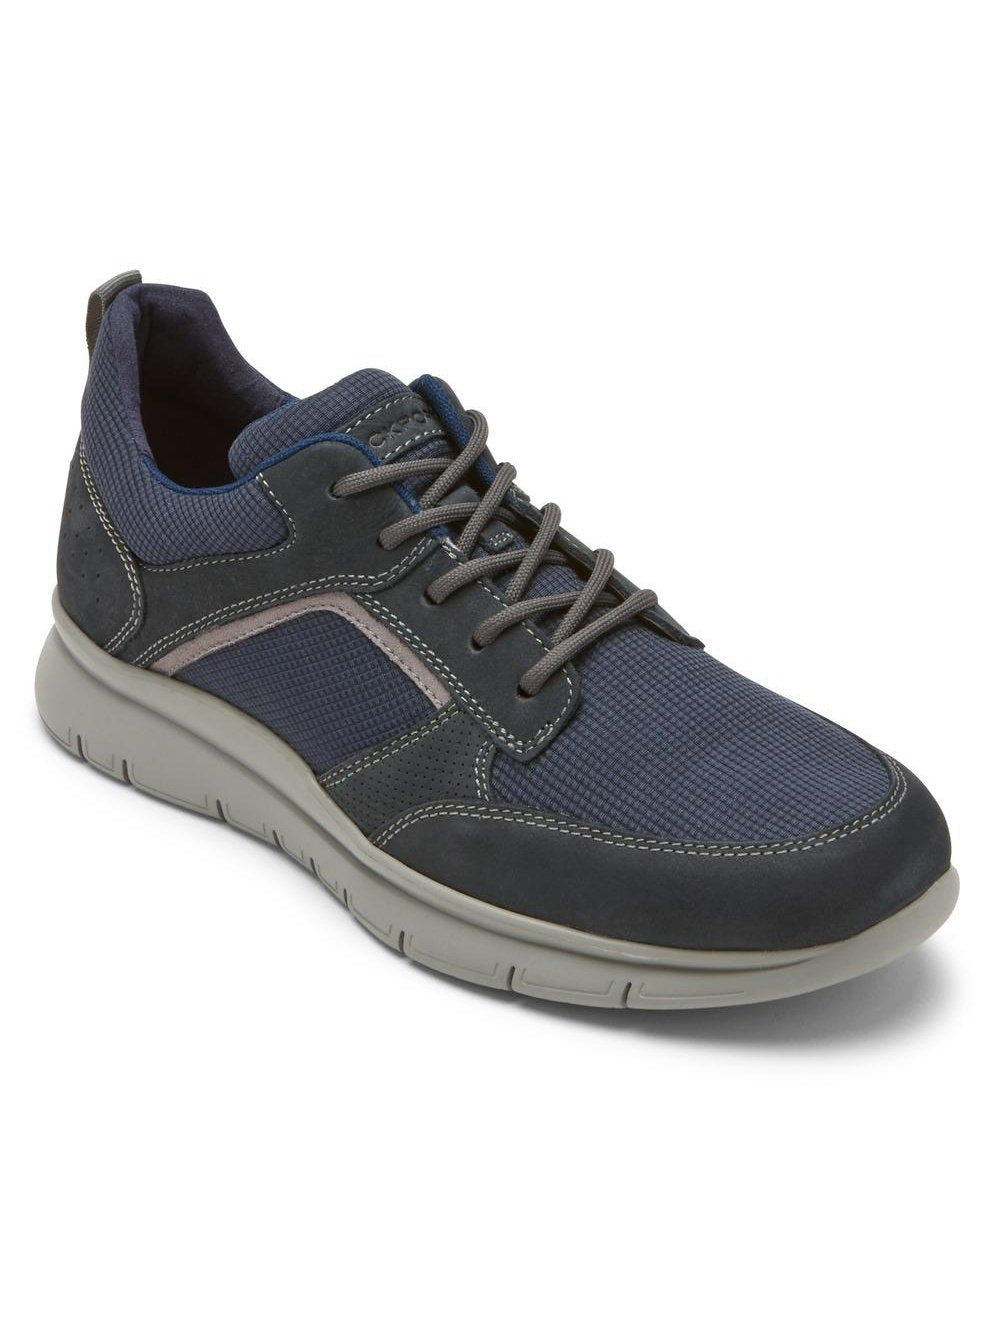 Rockport Men's Primetime Casual Mudguard Sneaker Navy Mesh Leather ...